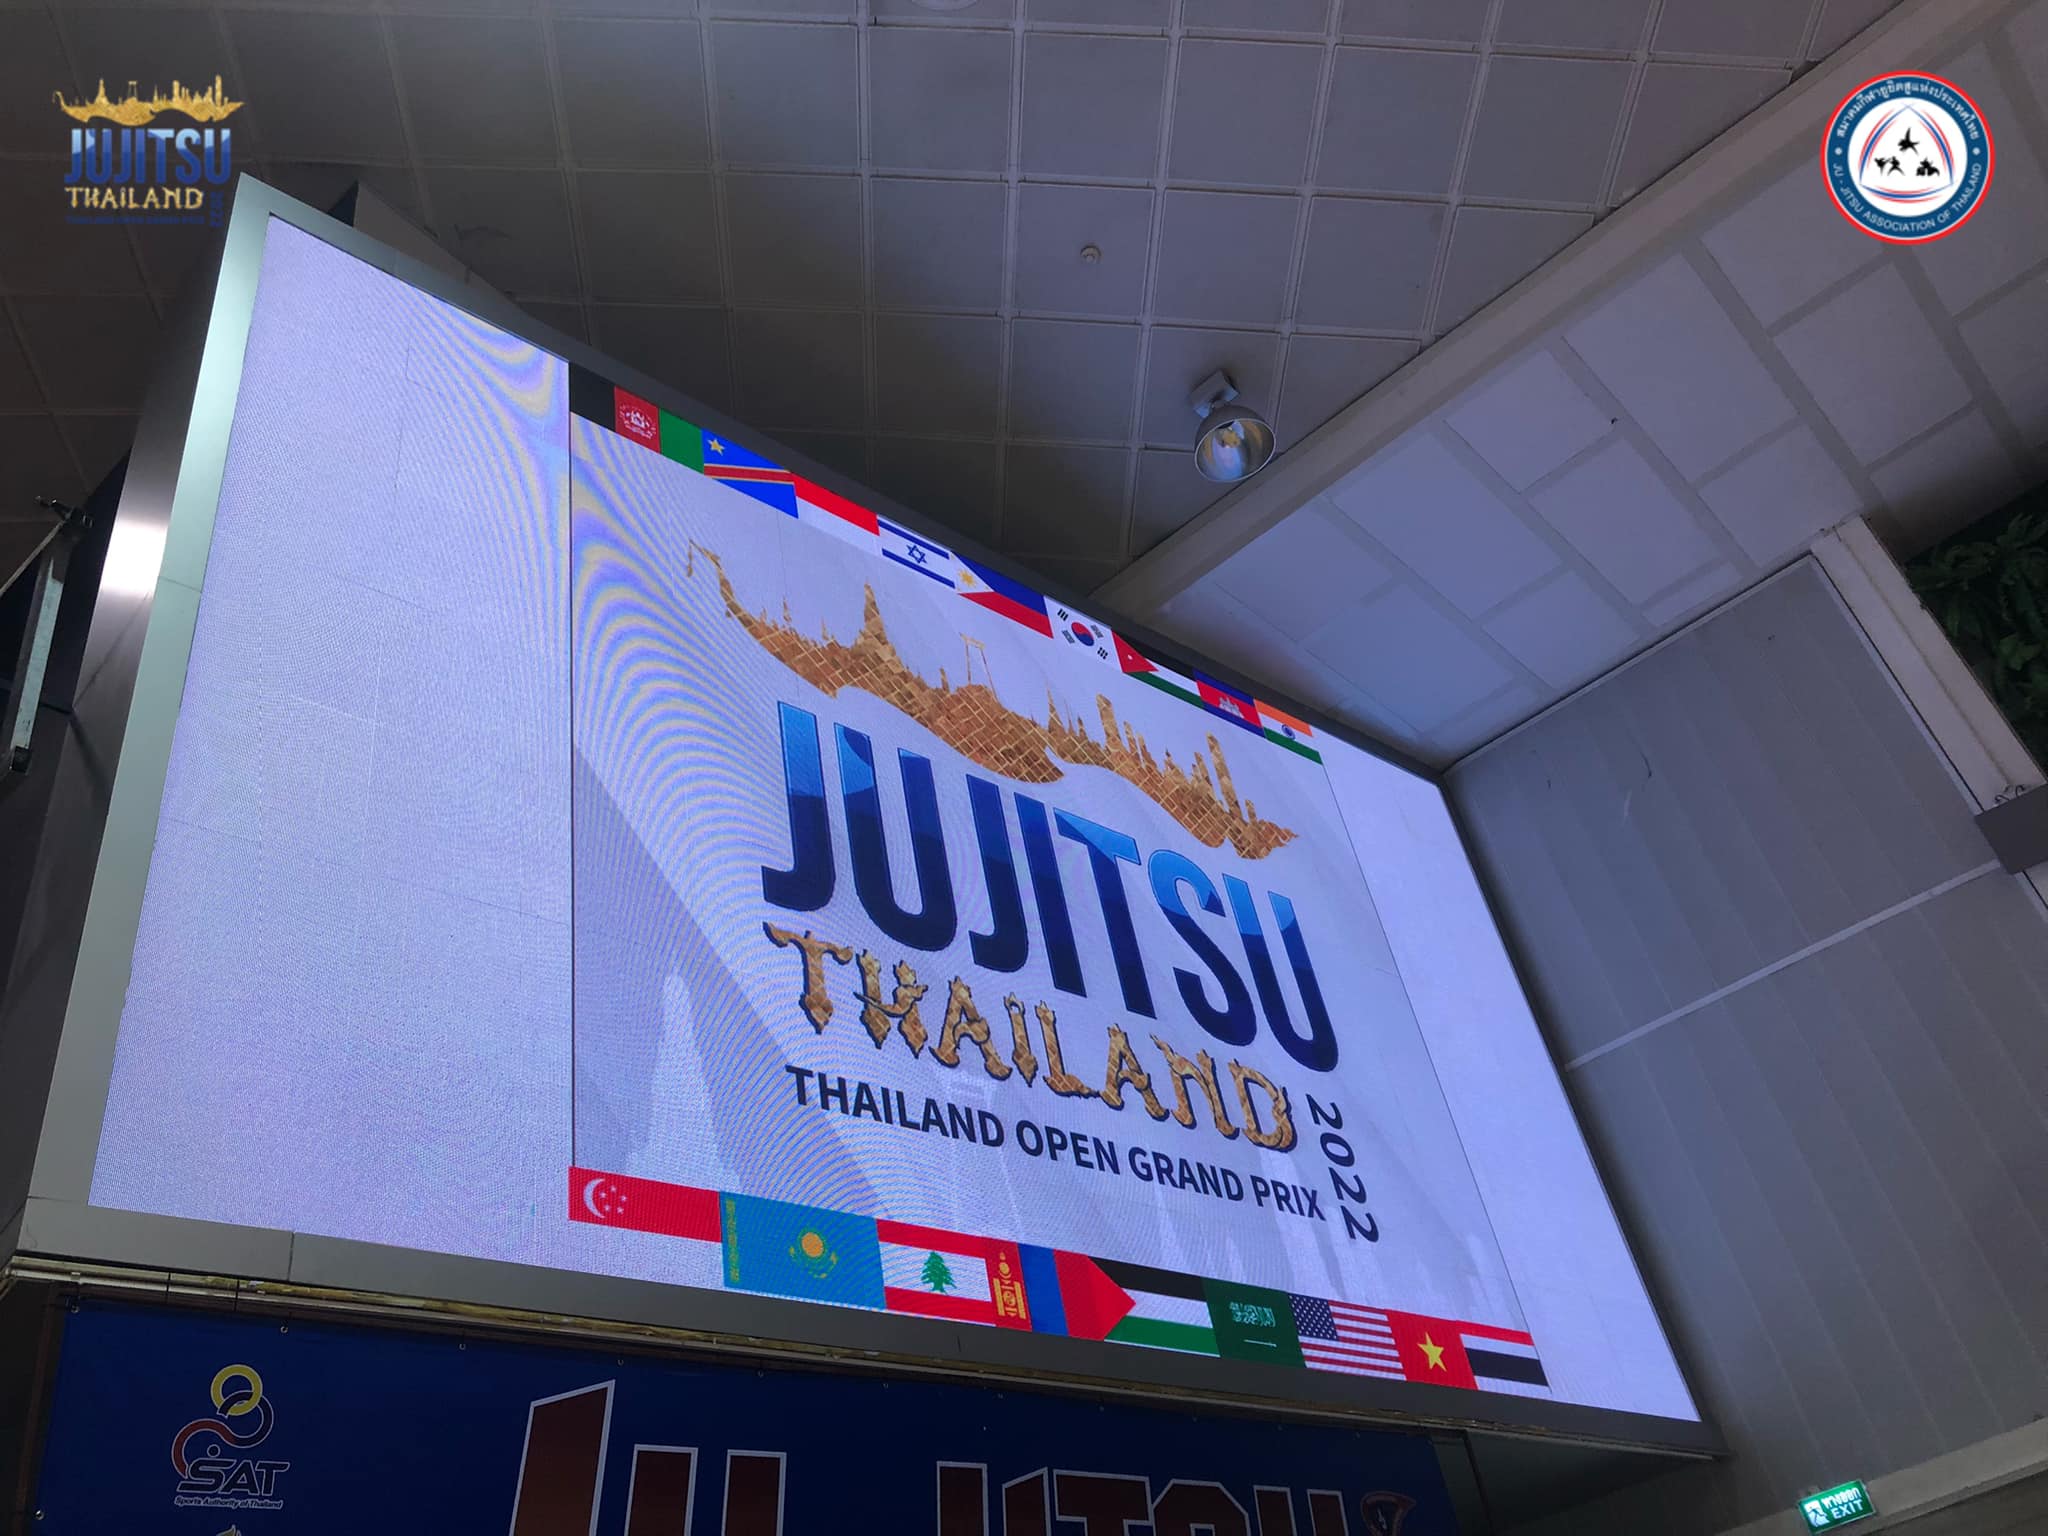 Jujitsu Thailand Open Grand Prix 2022